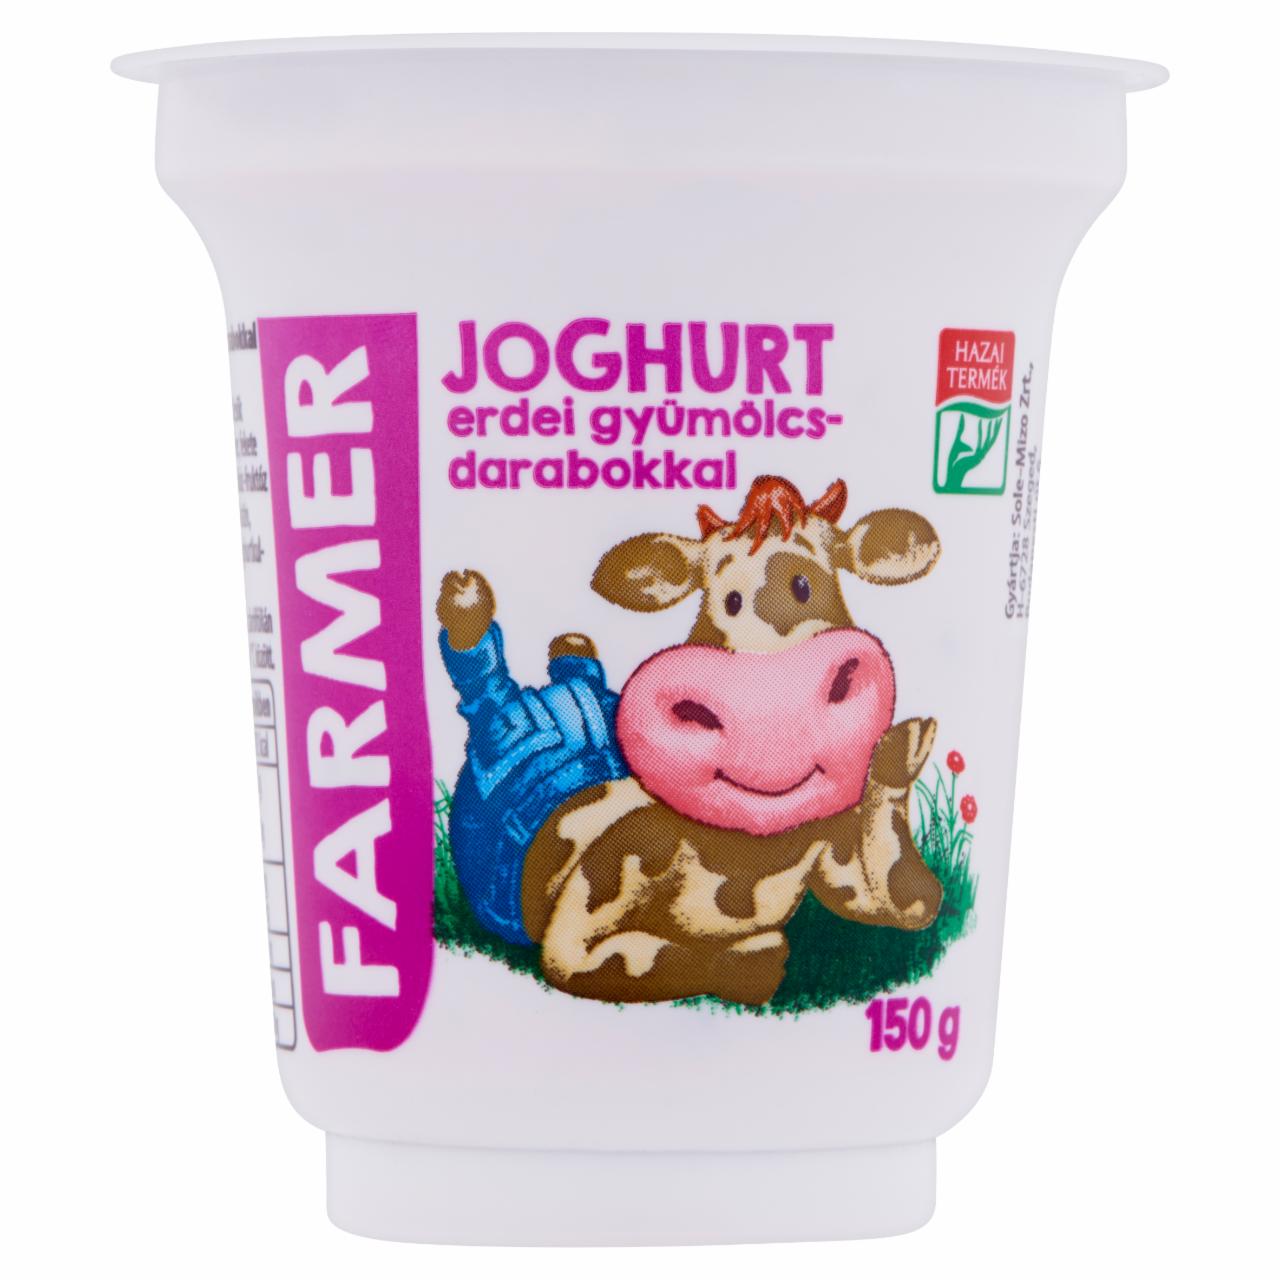 Képek - Farmer joghurt erdei gyümölcsdarabokkal 150 g